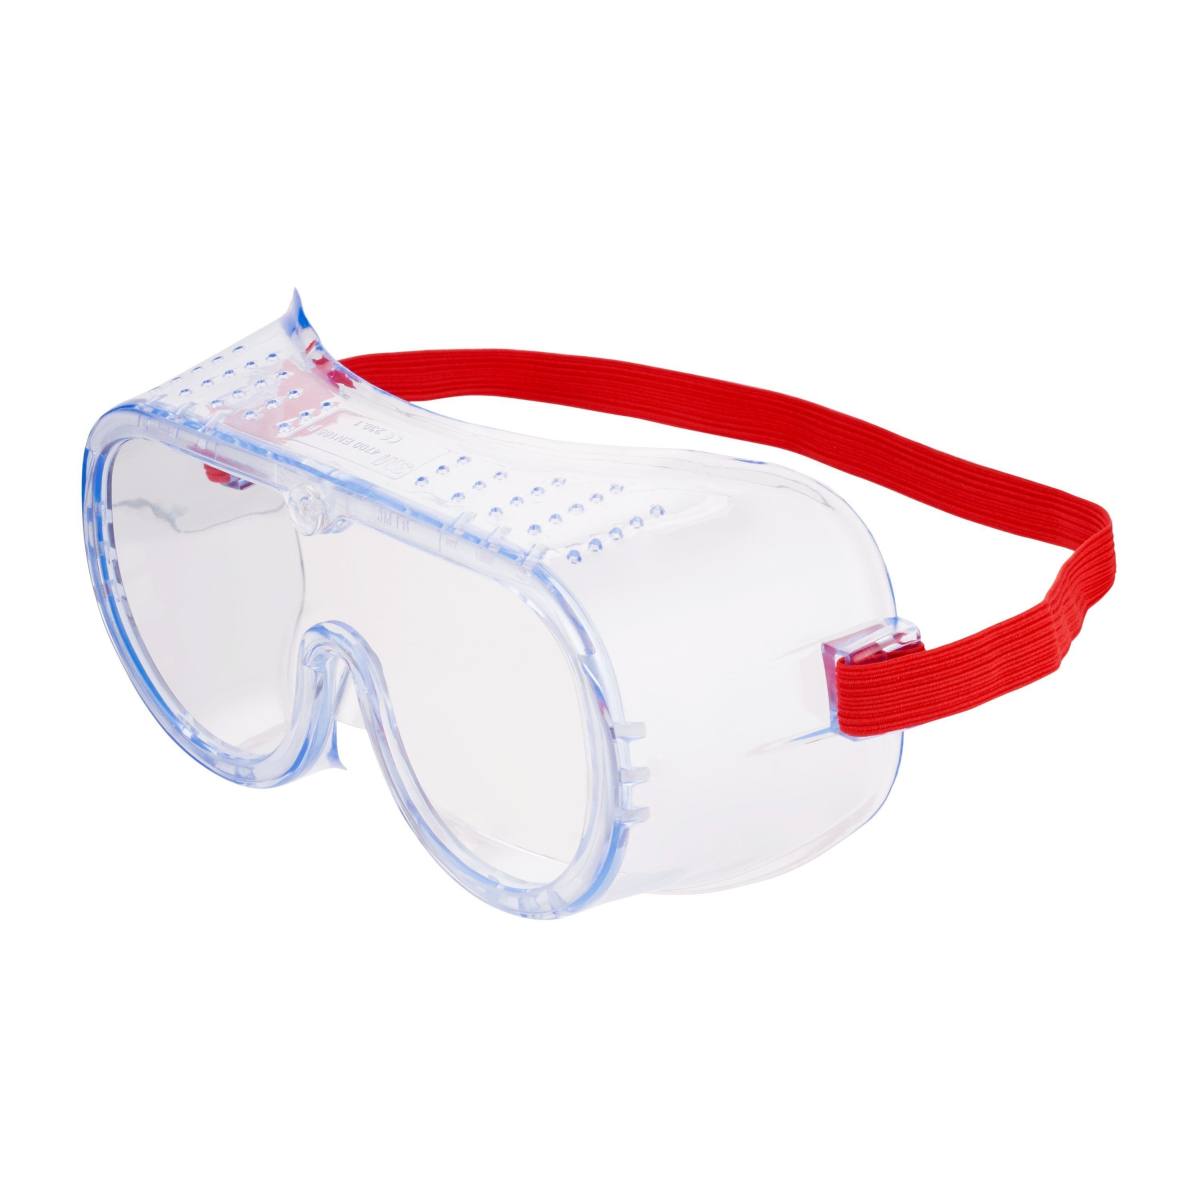 3M Full-vision veiligheidsbril 4700, helder